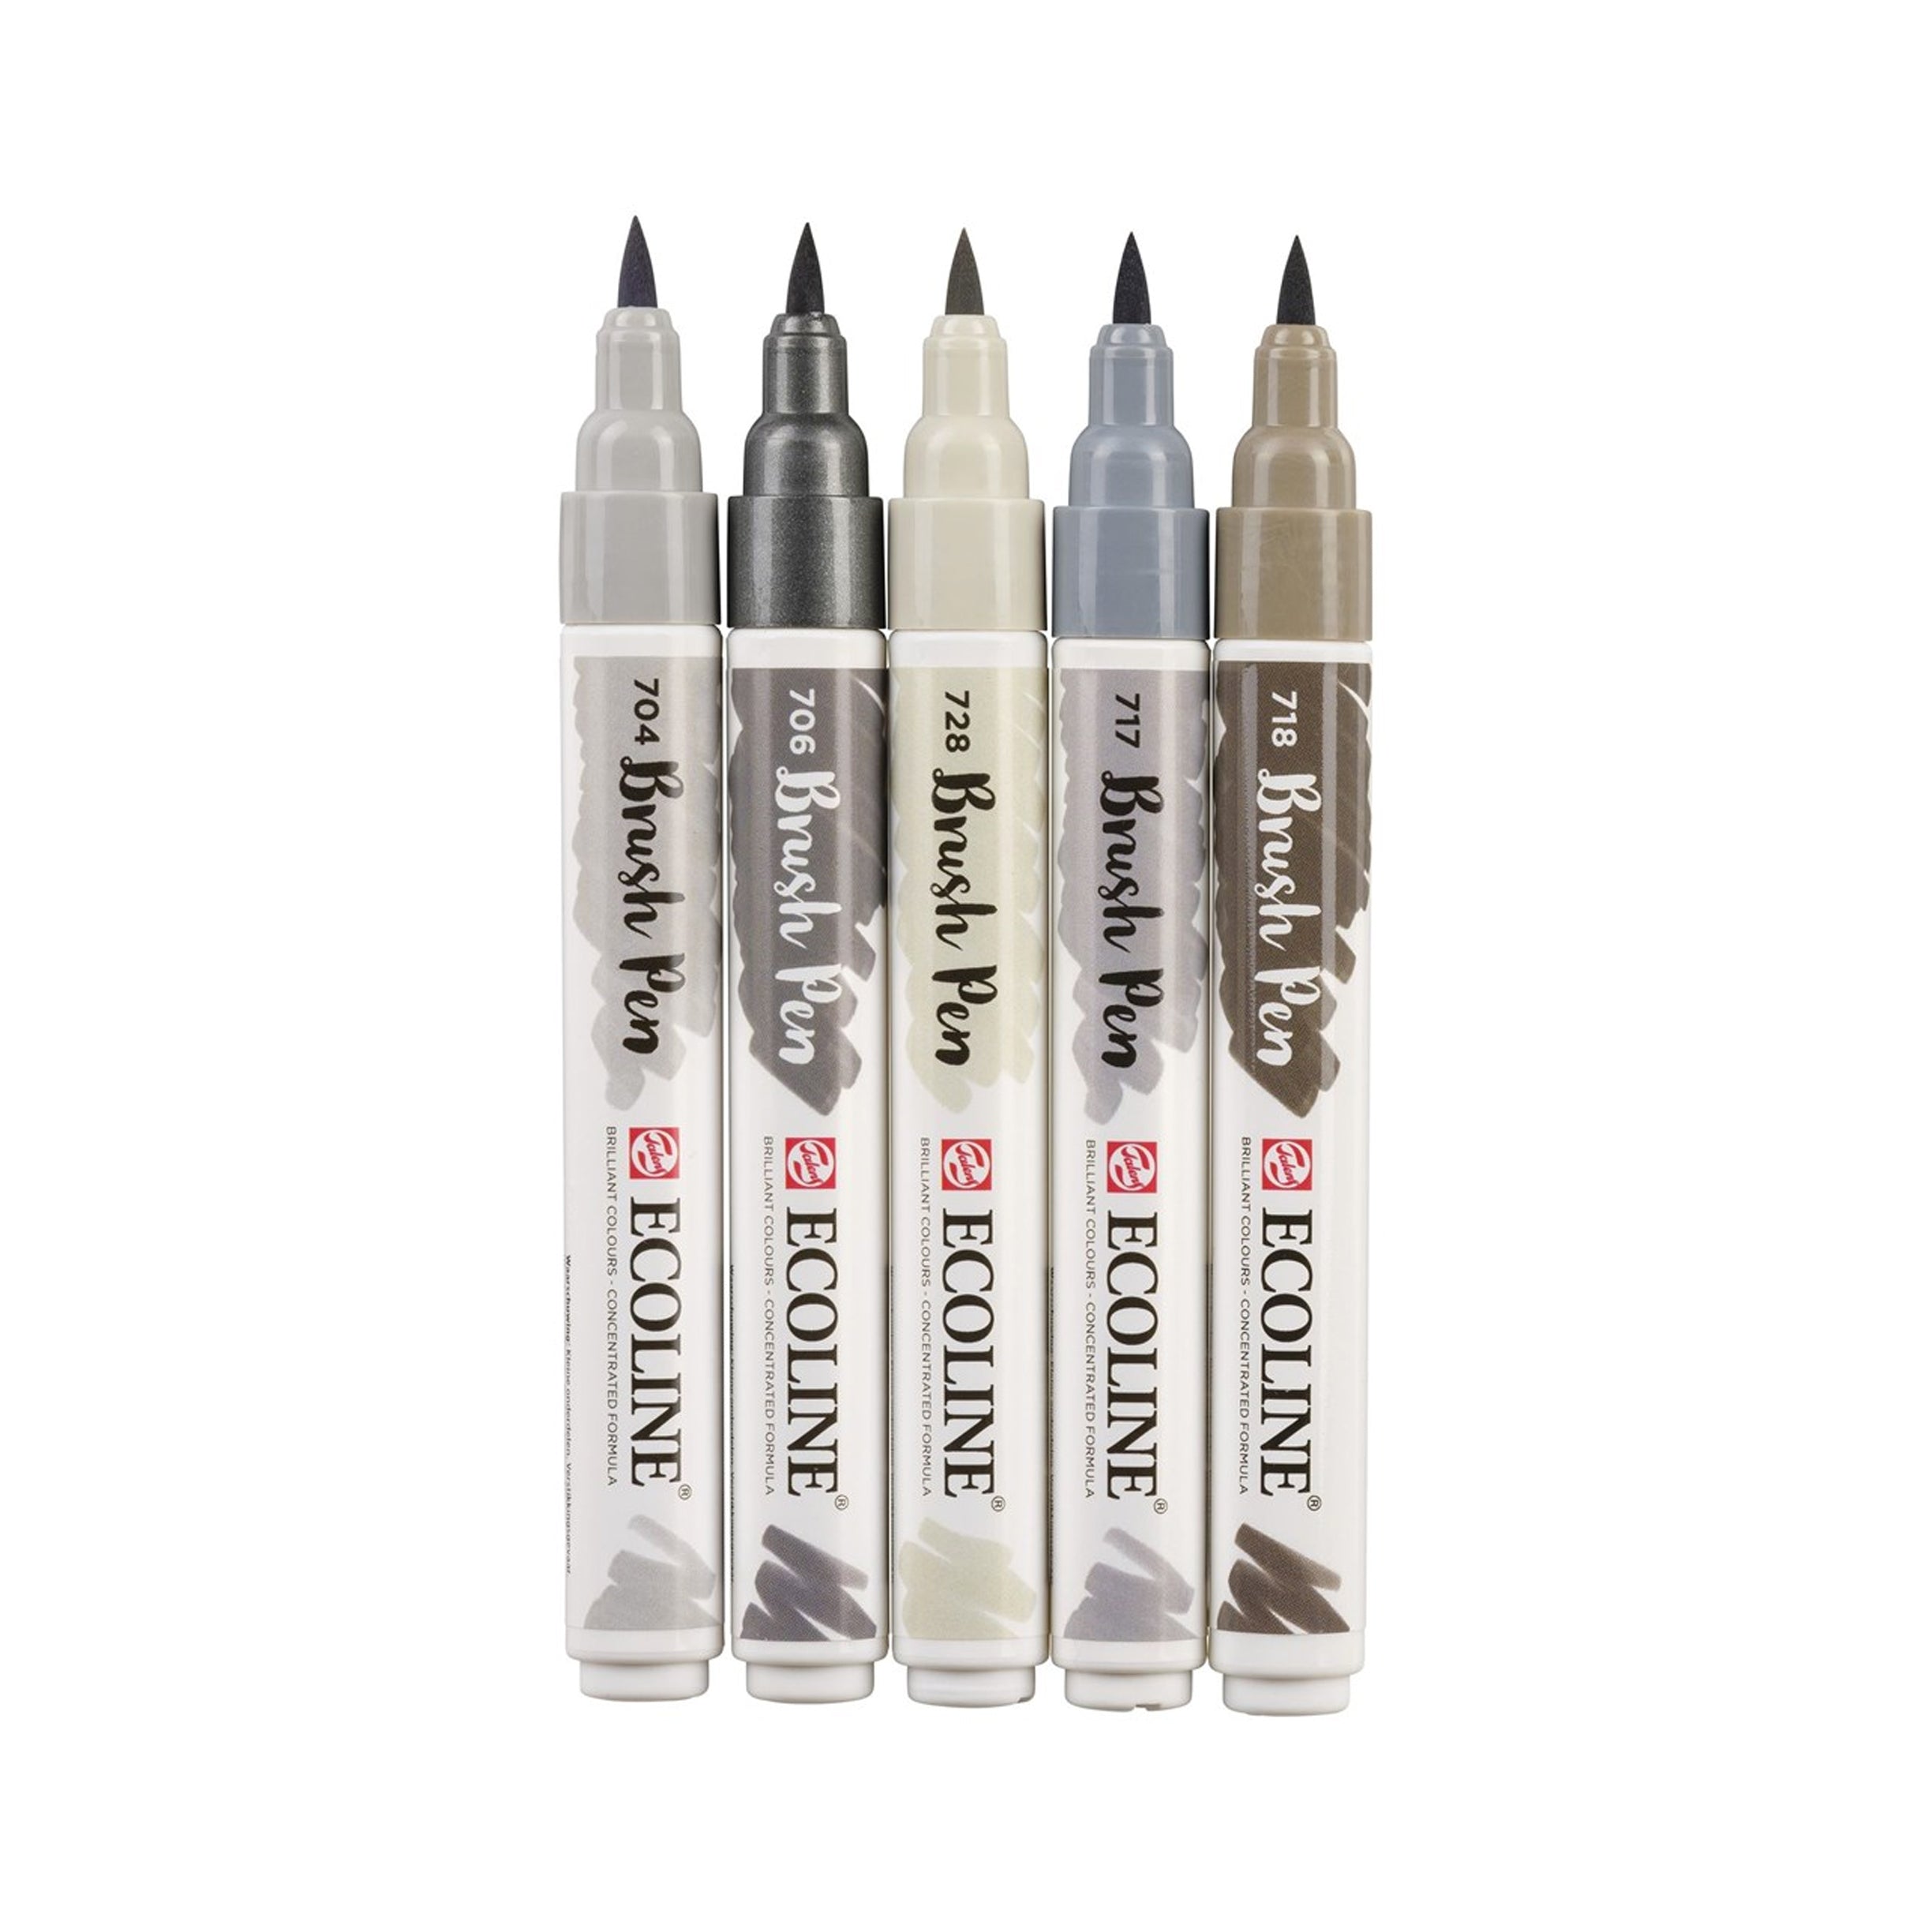 Royal Talens Ecoline Brush Pen Sets